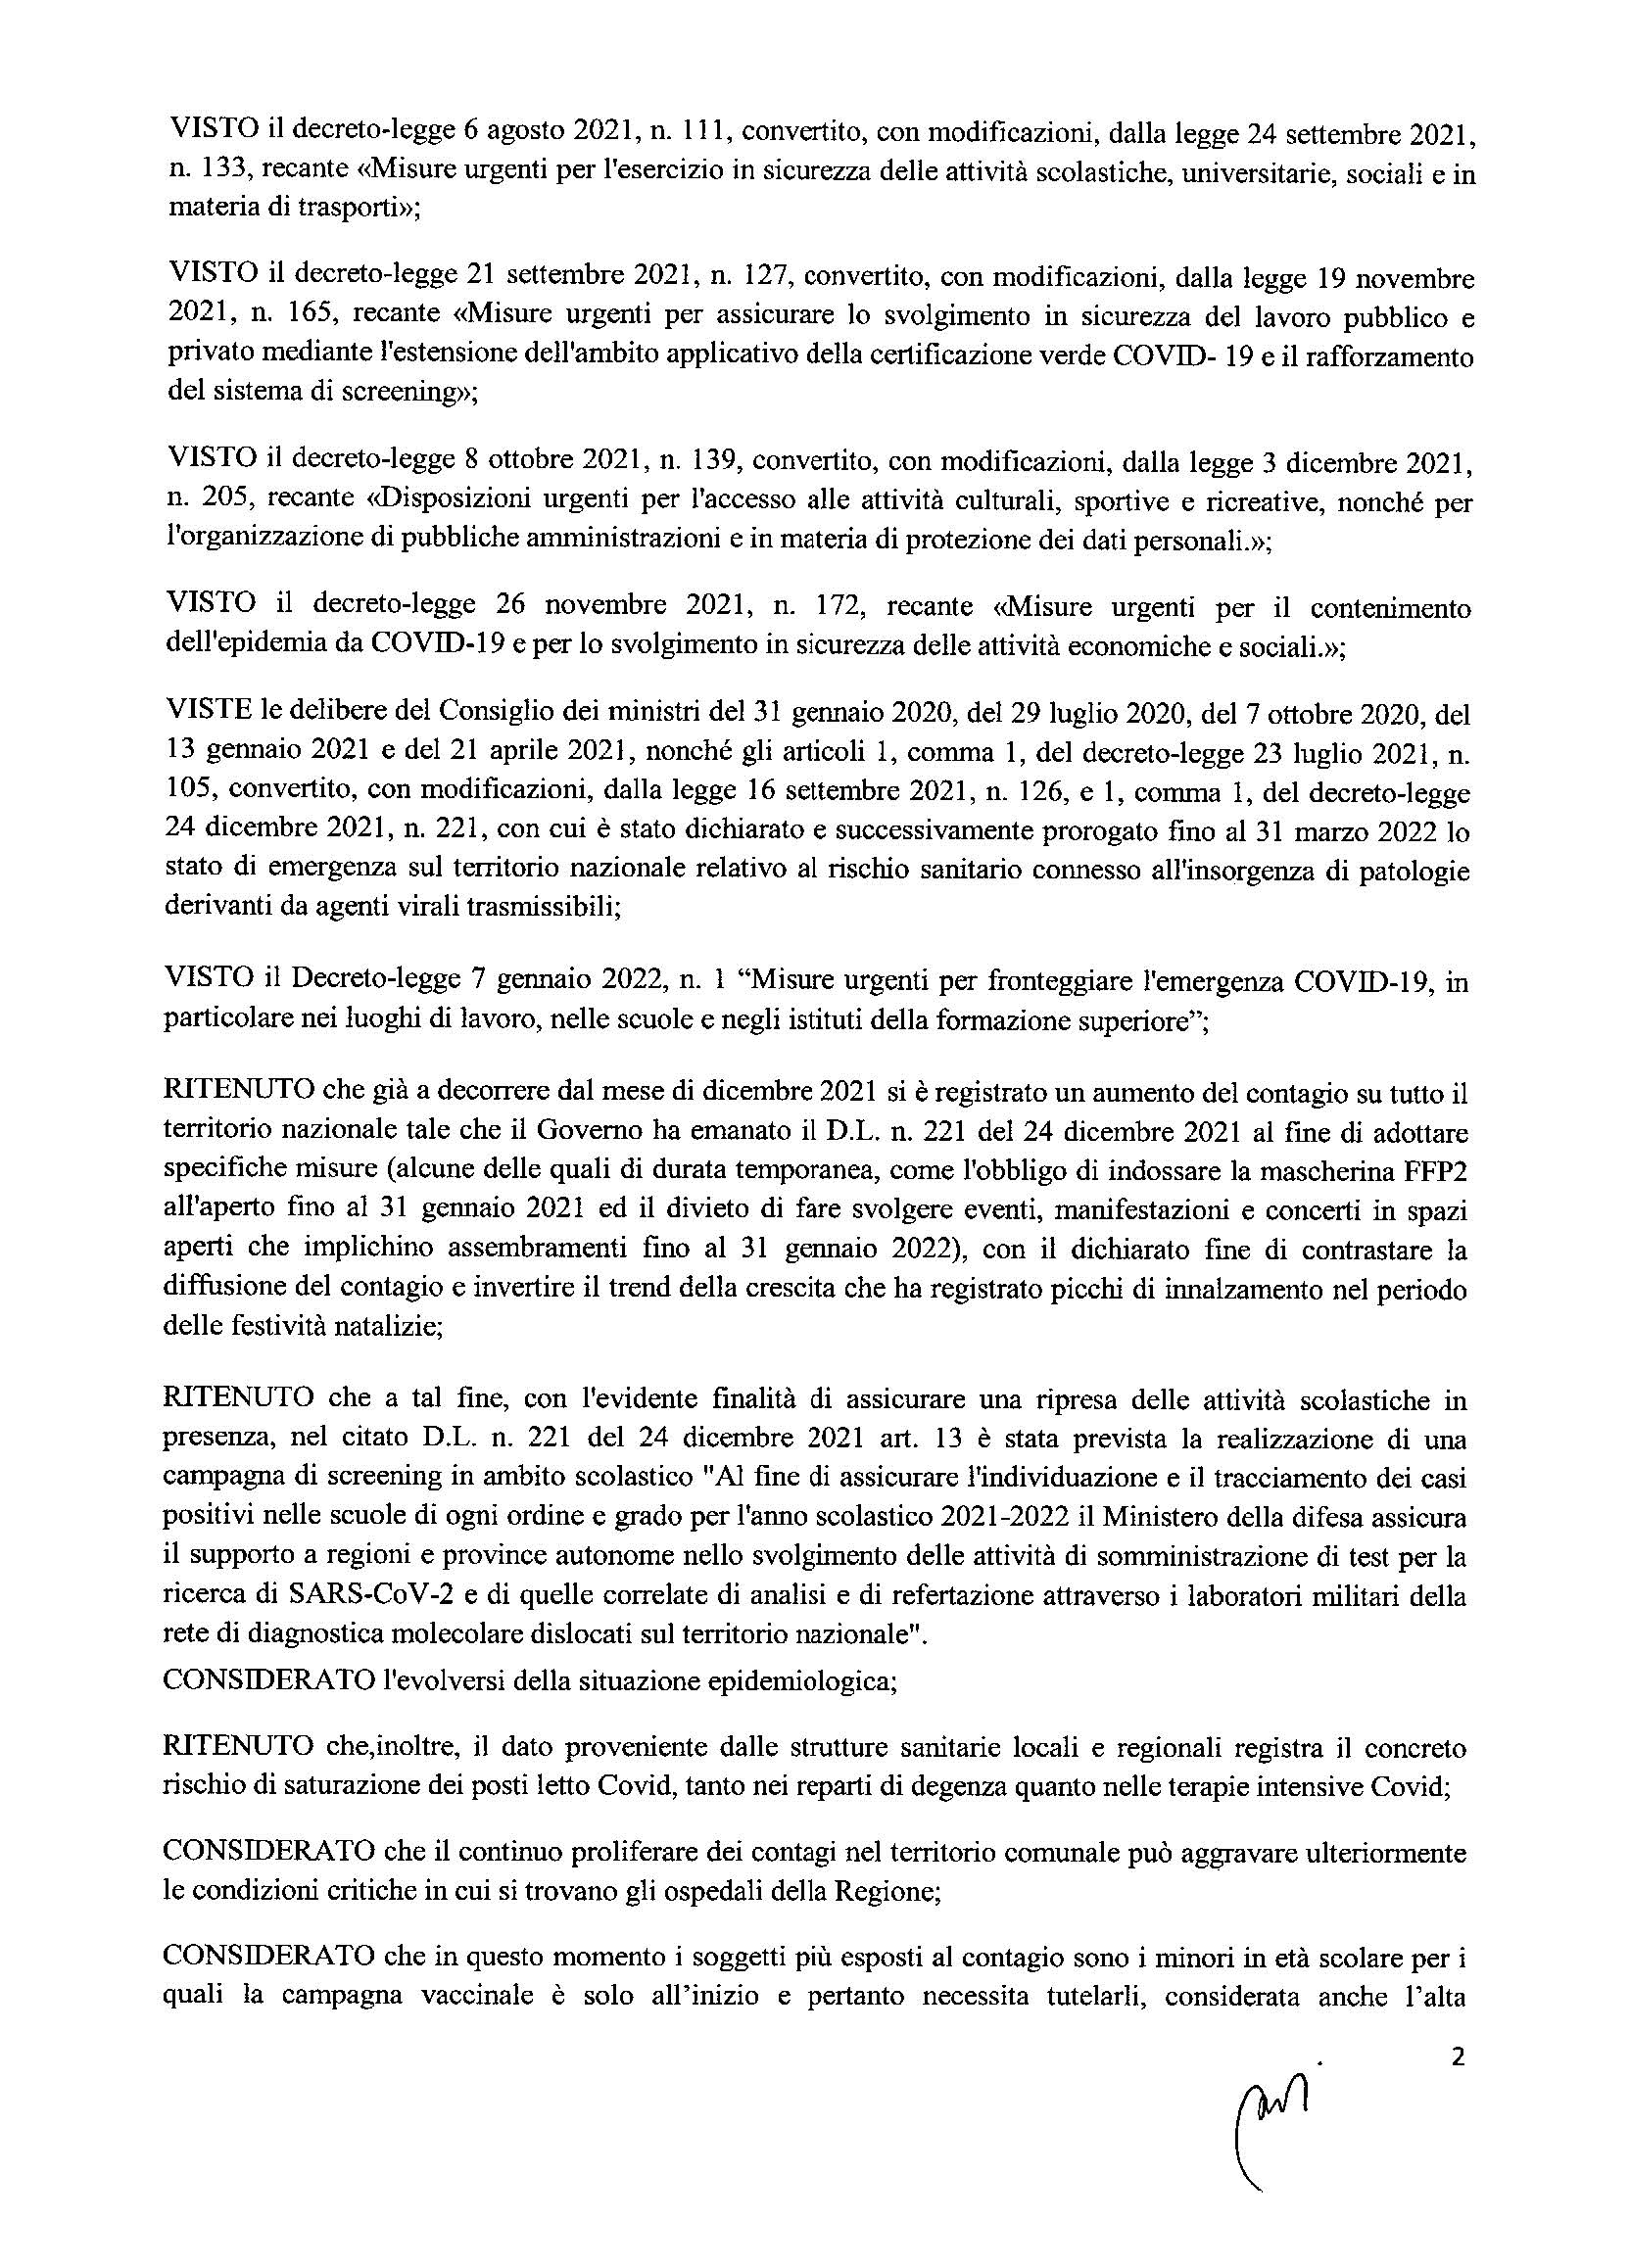 2022 ORDINANZA SINDACALE 1 Pagina 2